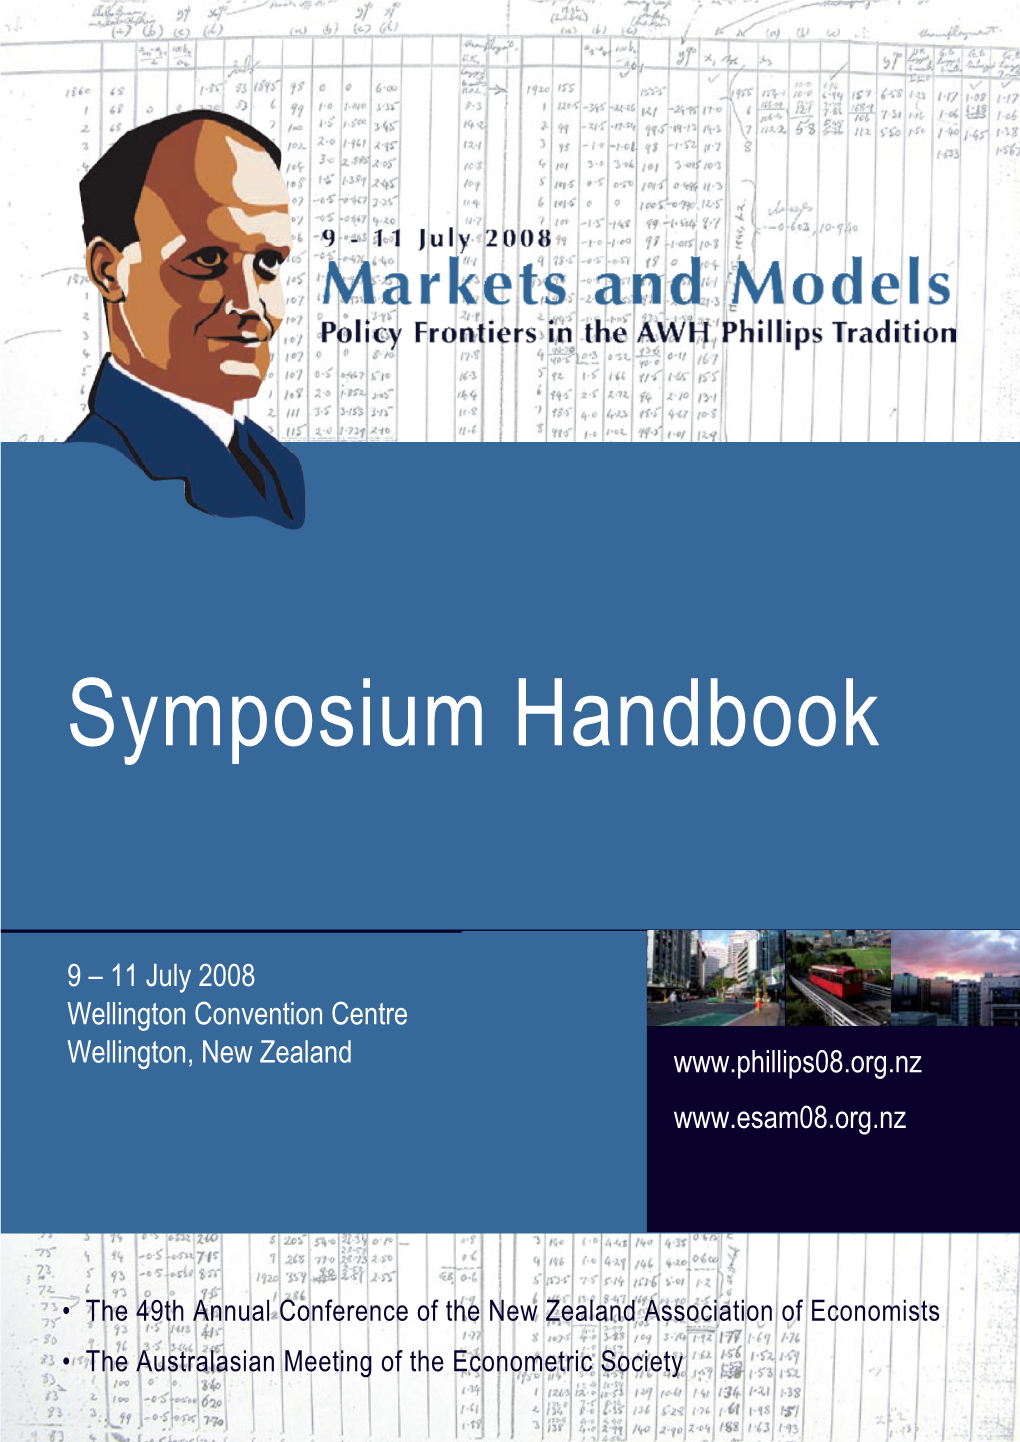 Symposium Handbook